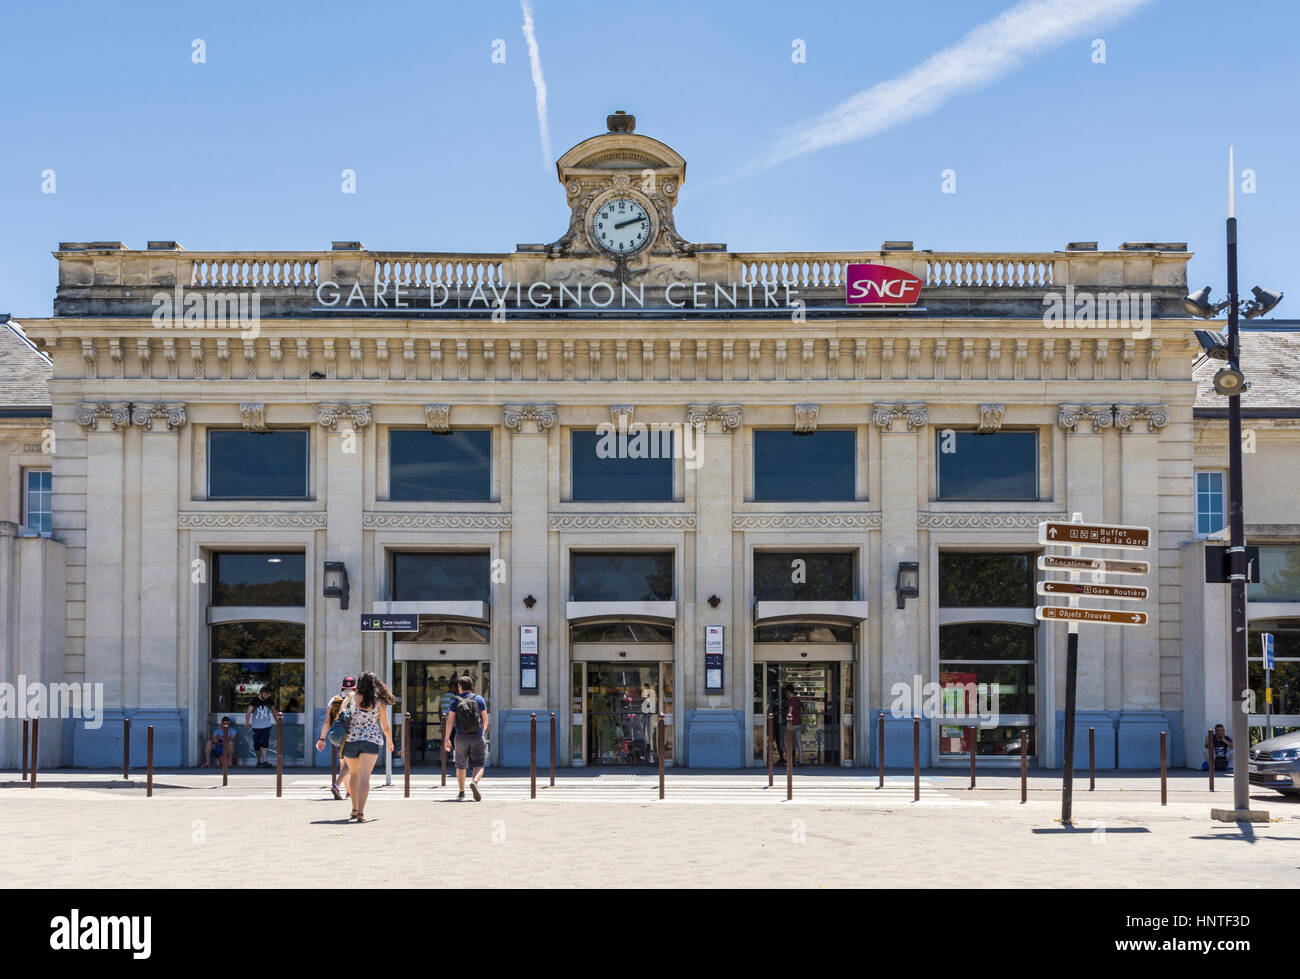 Gare d'Avignon-Centre, Avignon, France Stock Photo